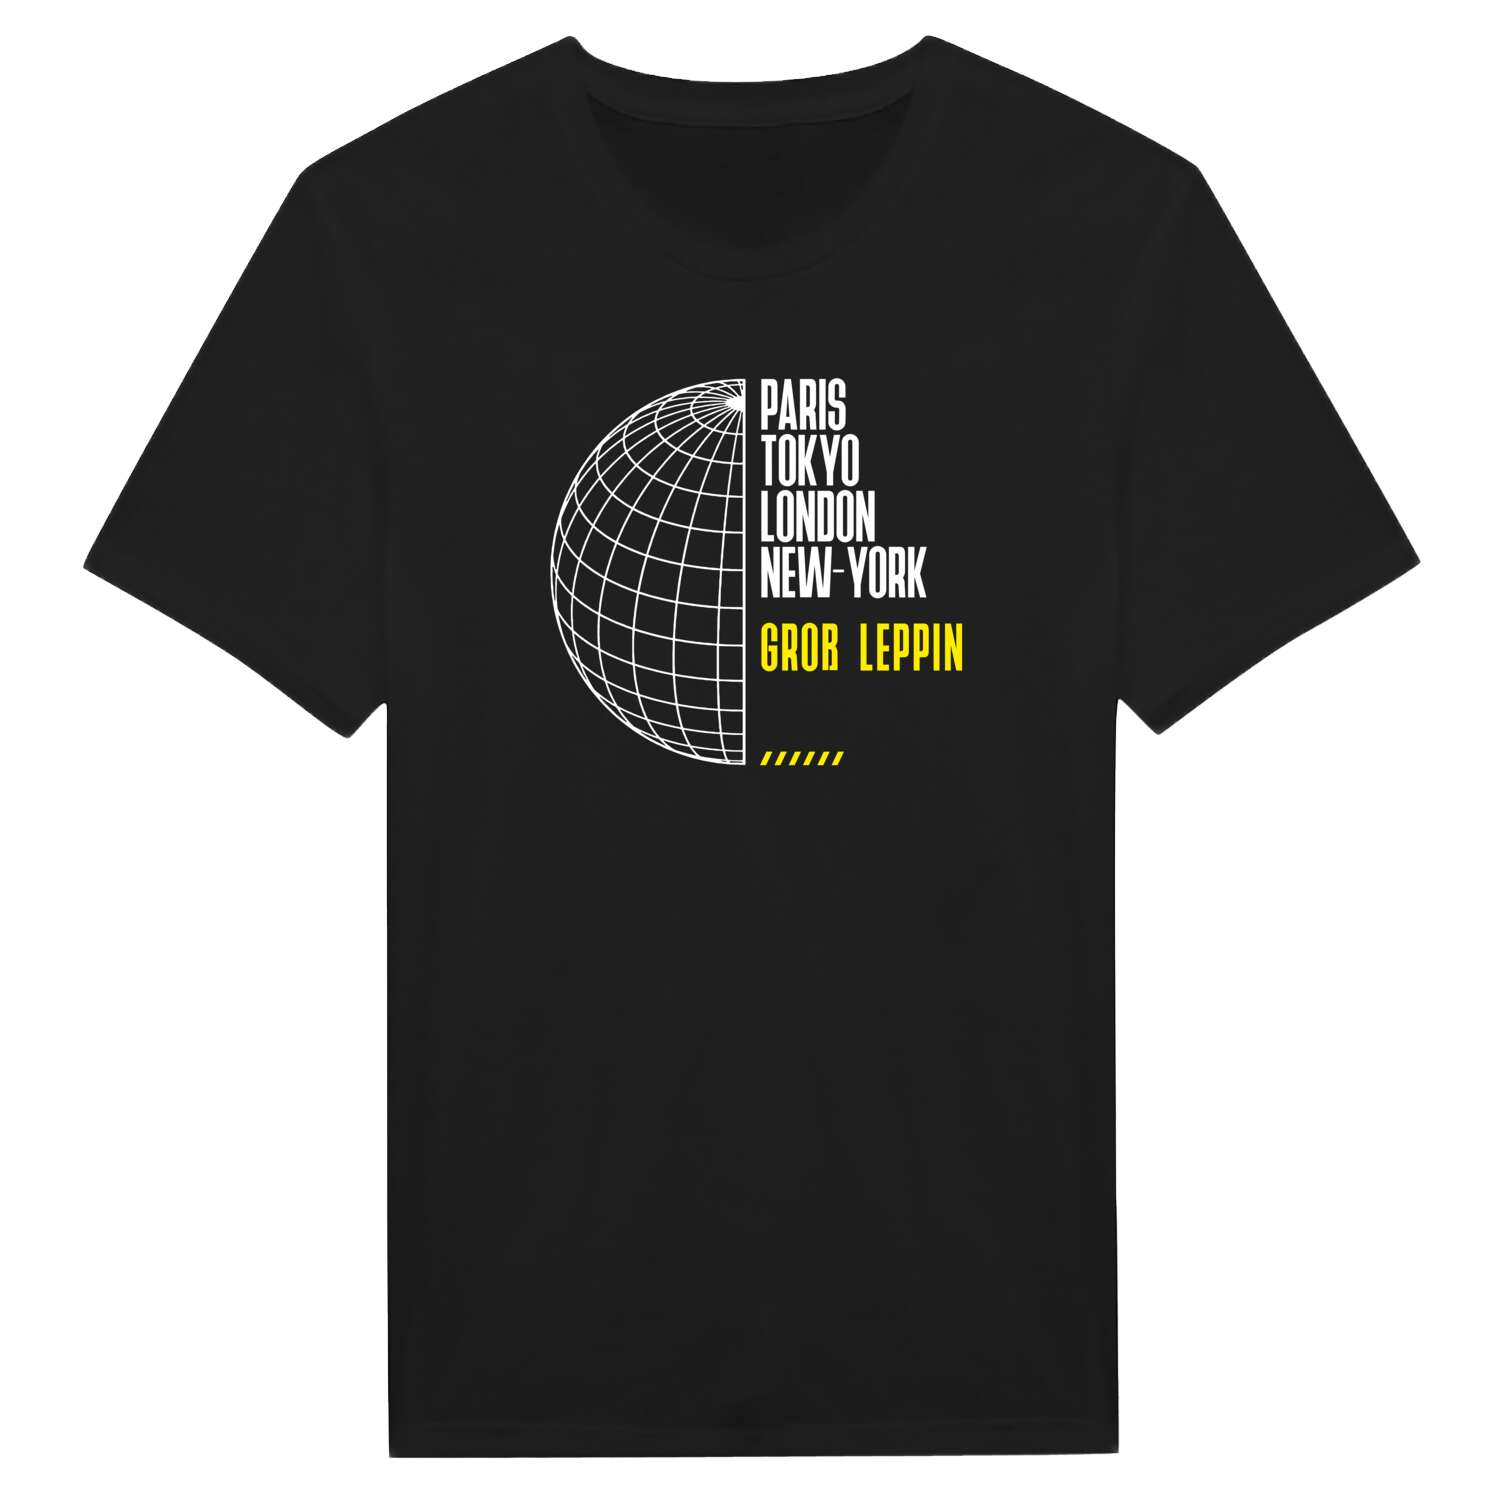 Groß Leppin T-Shirt »Paris Tokyo London«